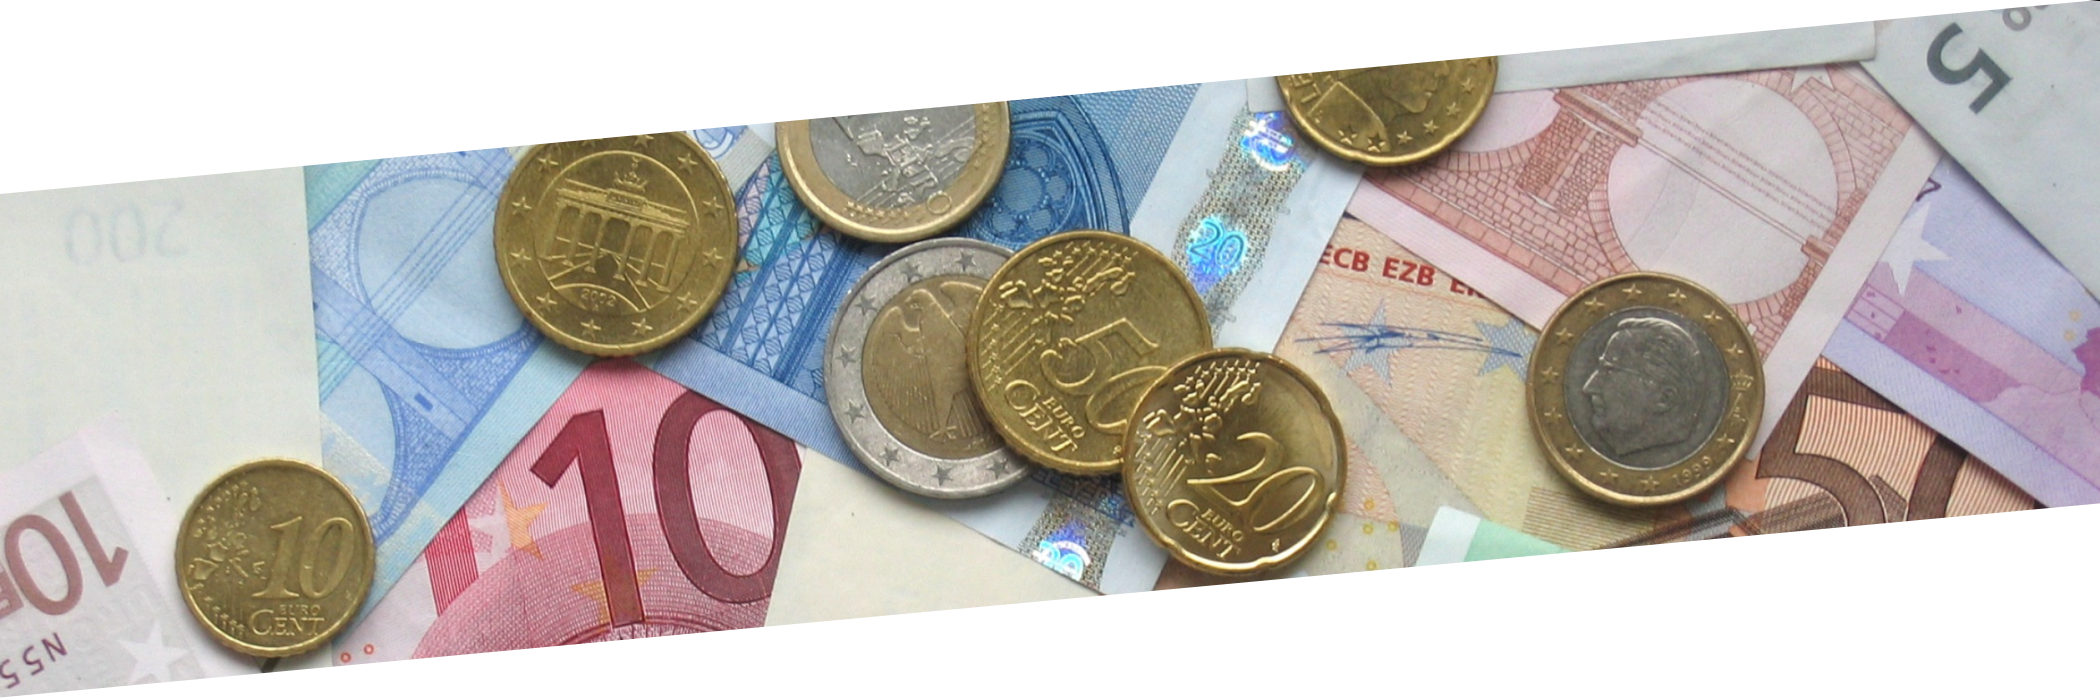 banconote e monete